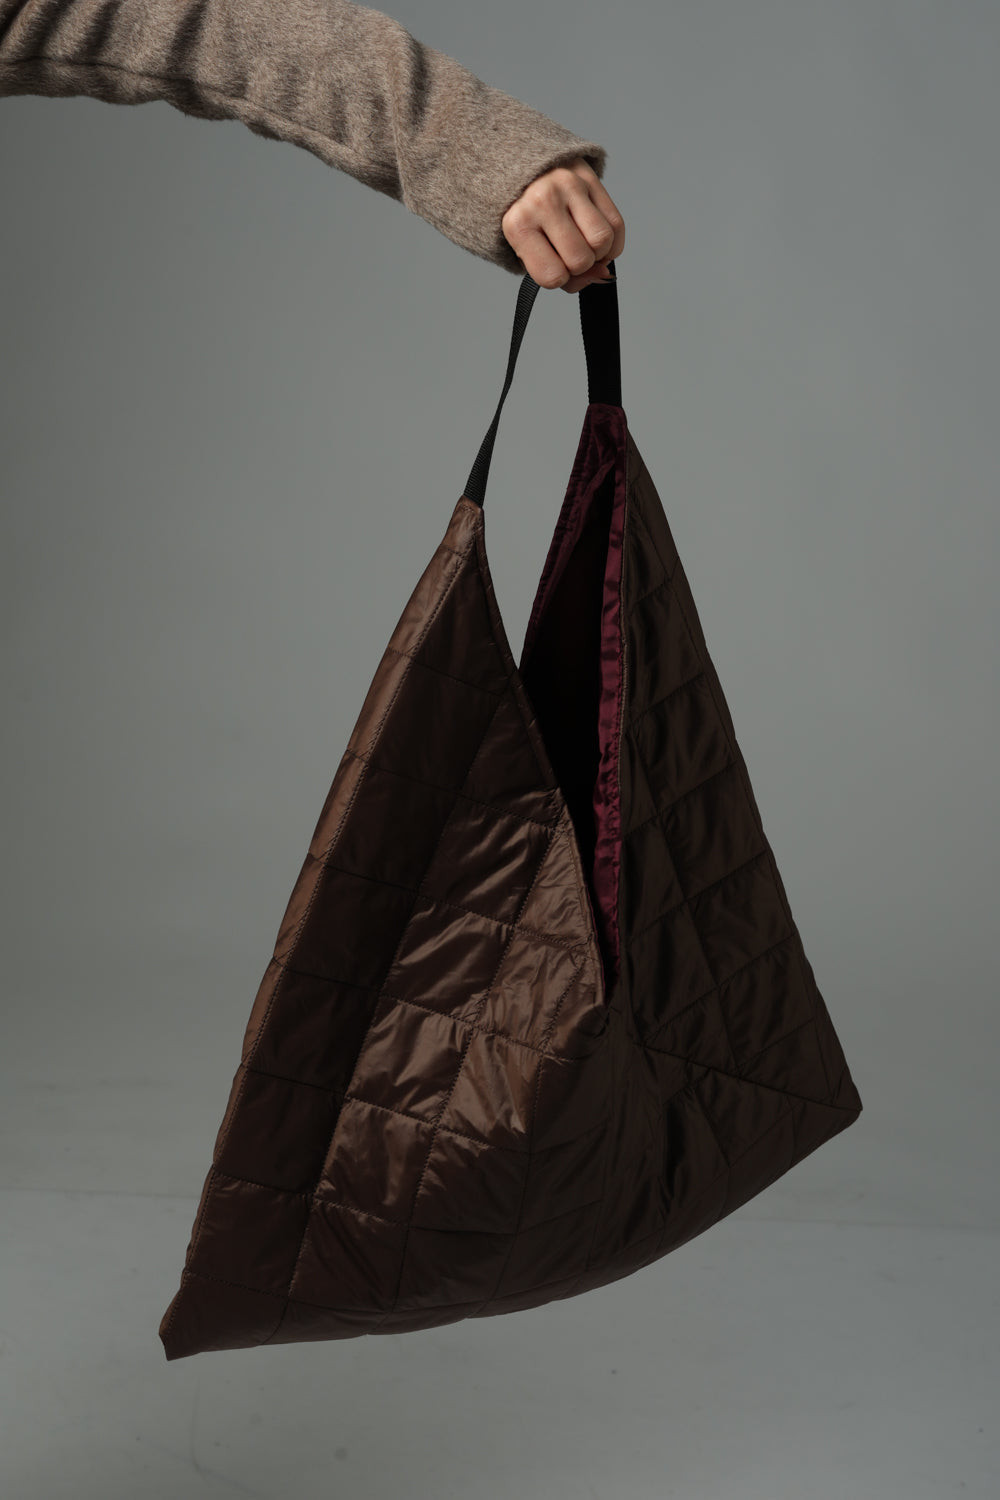  Quilted Chocolate Bag תיק מרופד לאישה סיסטרז